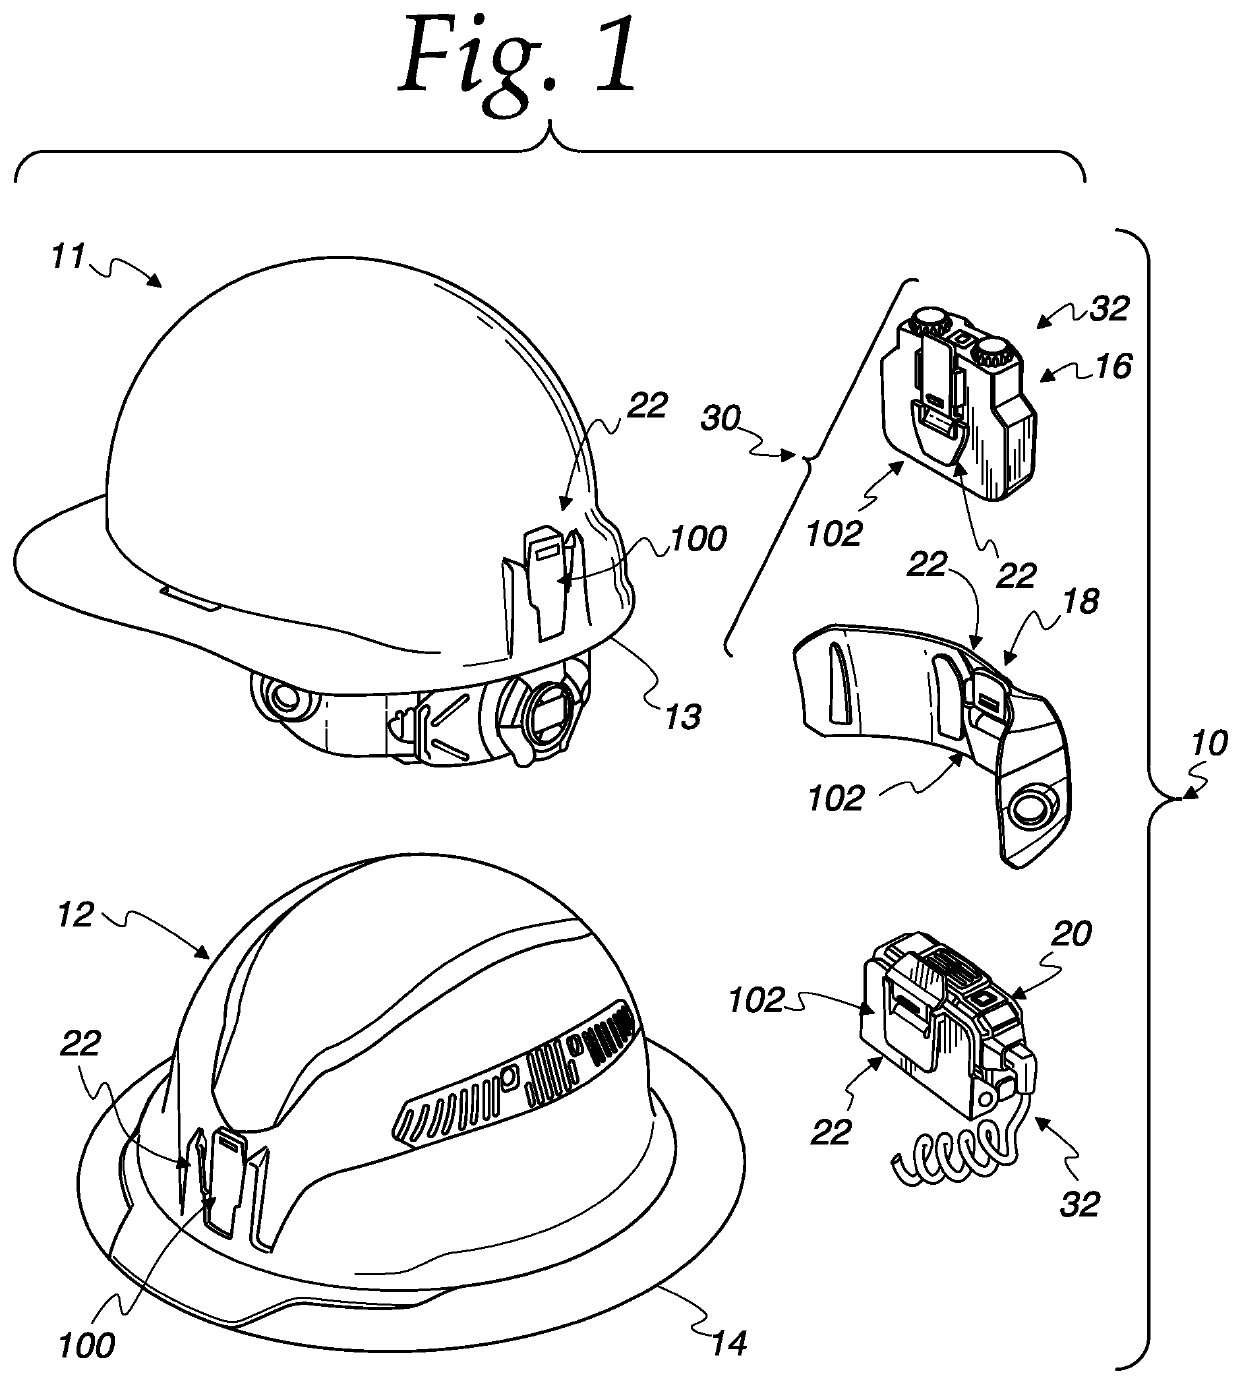 Safety helmet accesssory system